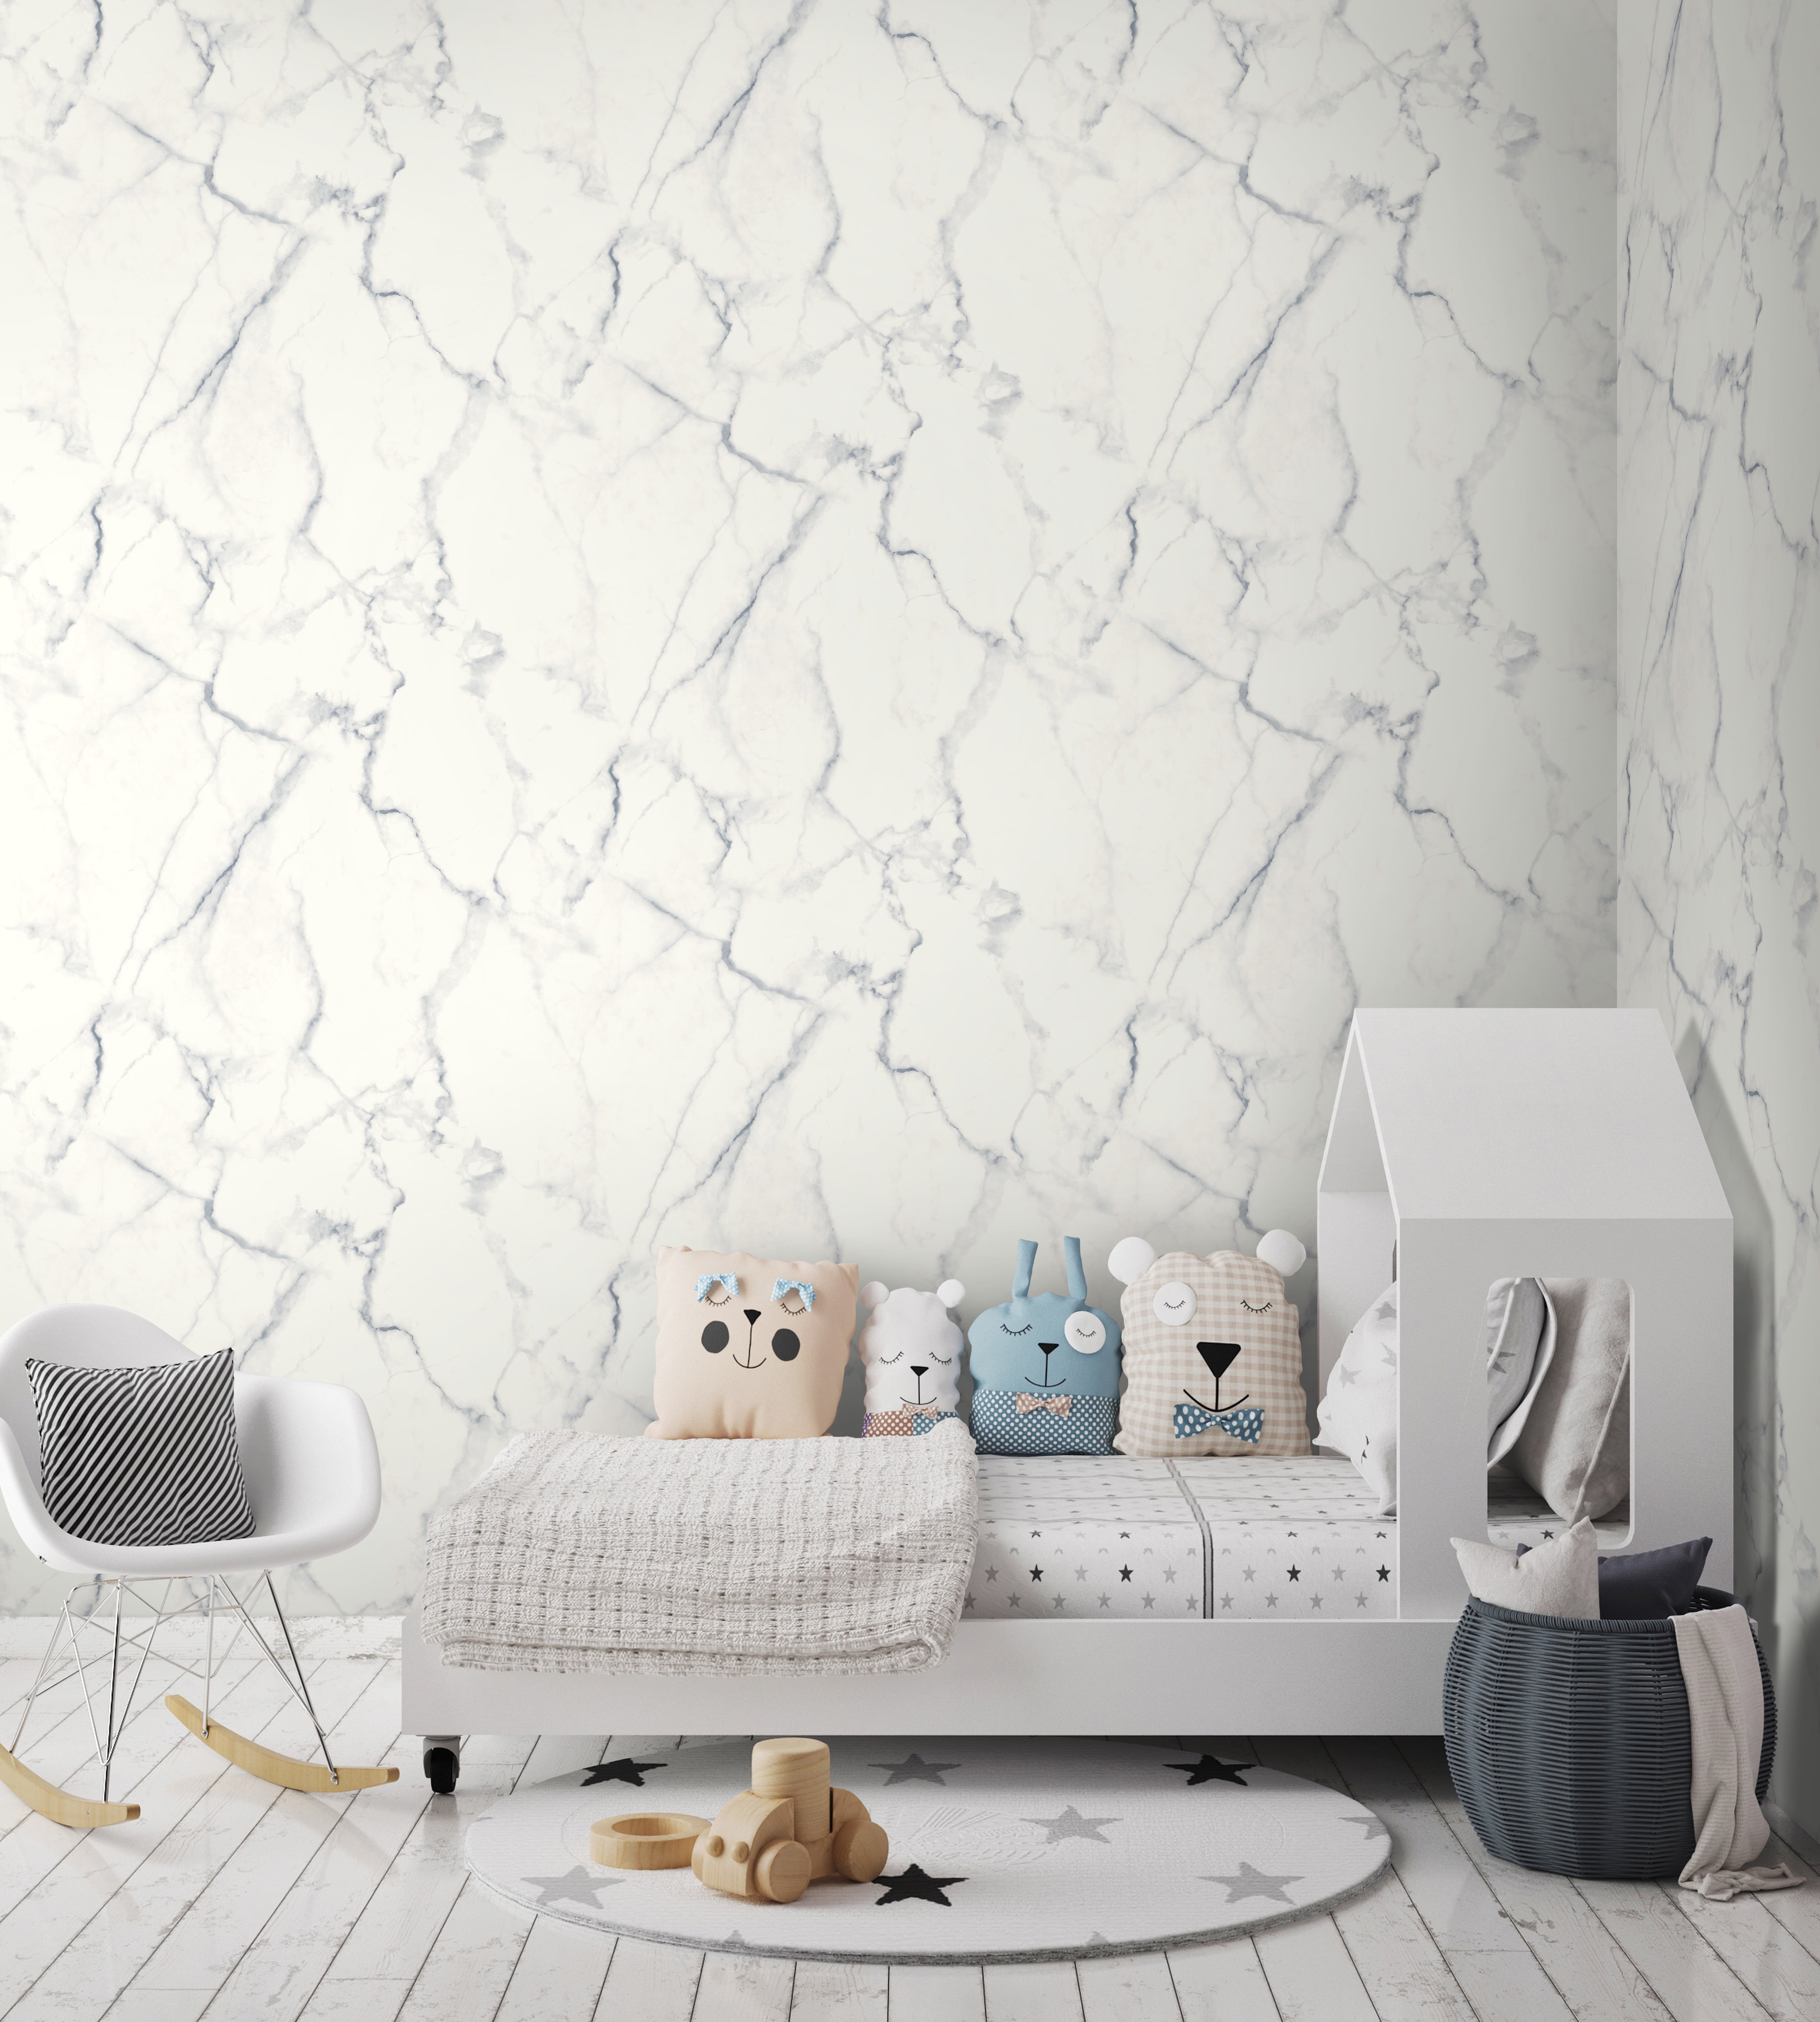 RoomMates Carrara Marble Peel & Stick Wallpaper - White/Black 